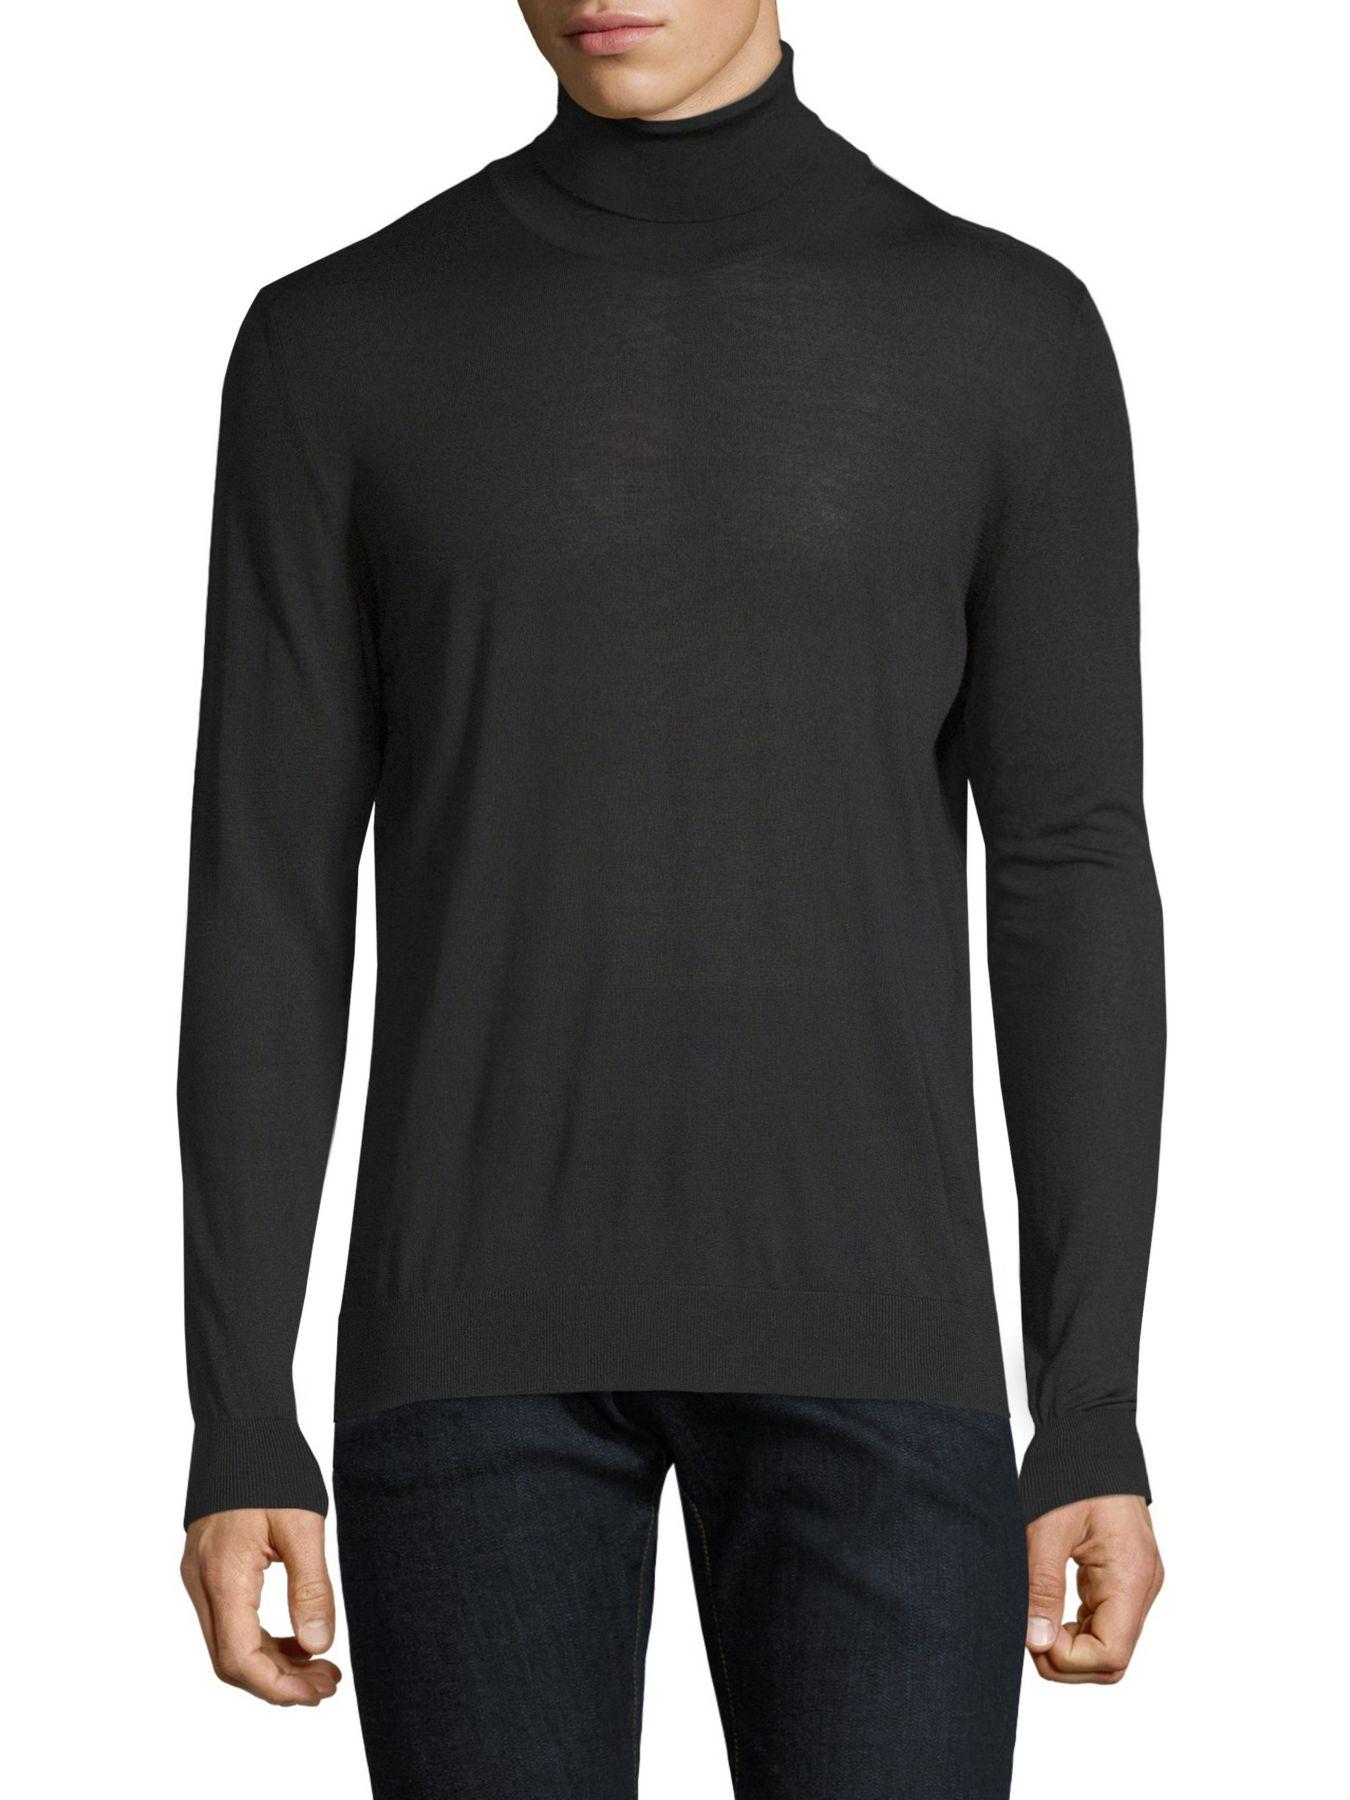 Kiton Wool Turtleneck Sweater in Black for Men - Save 63% - Lyst